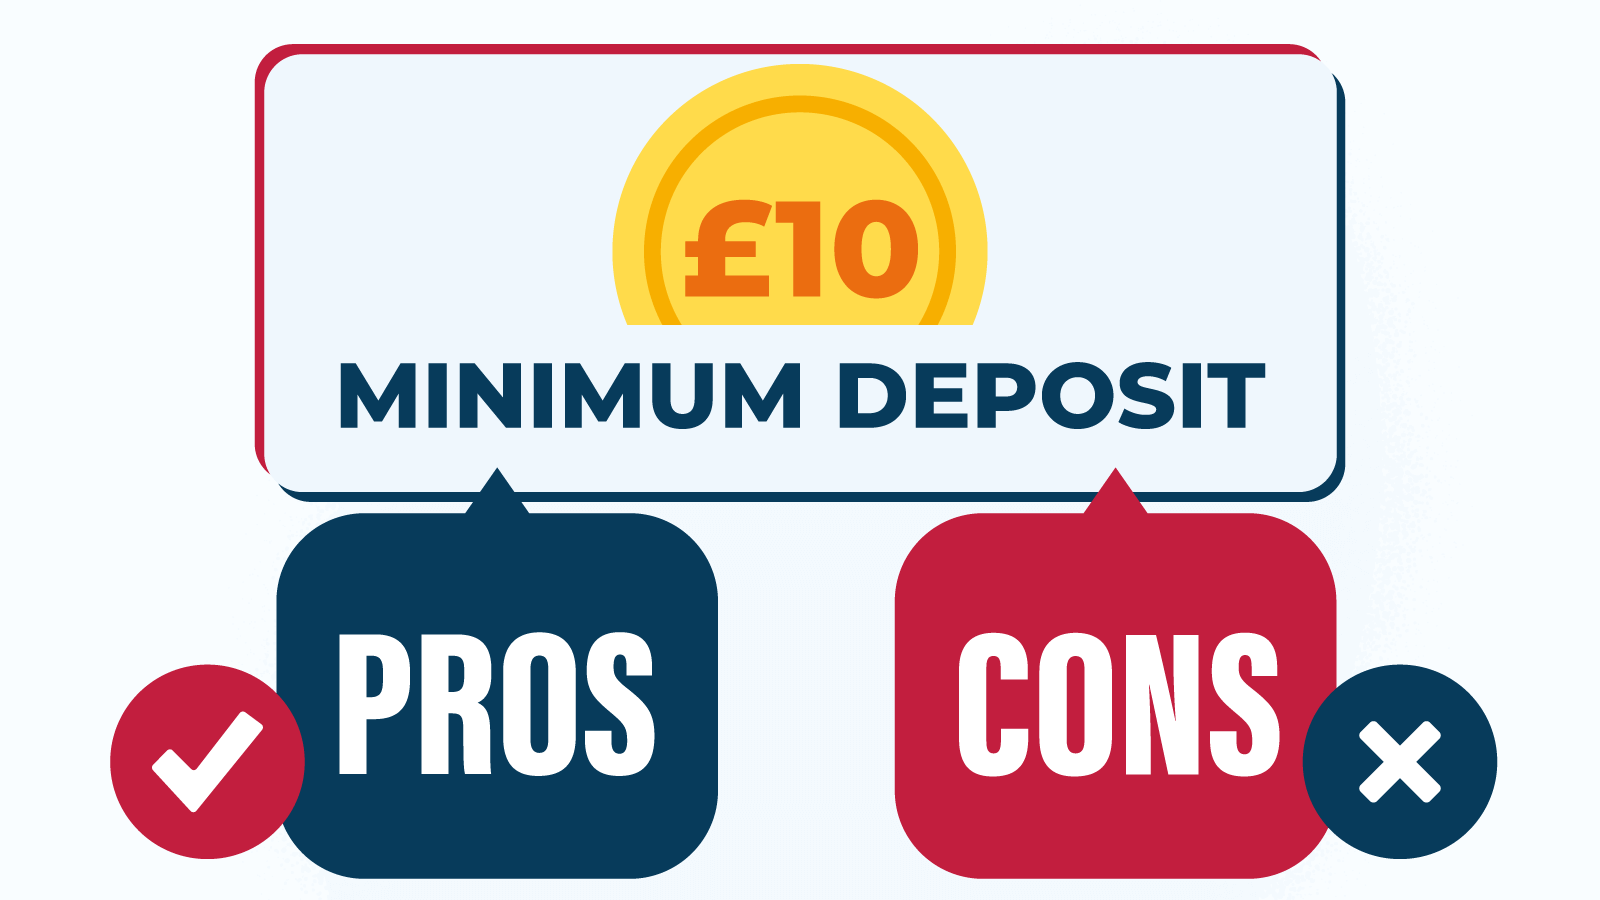 Pros and Cons of Casinos with 10 Minimum Deposit